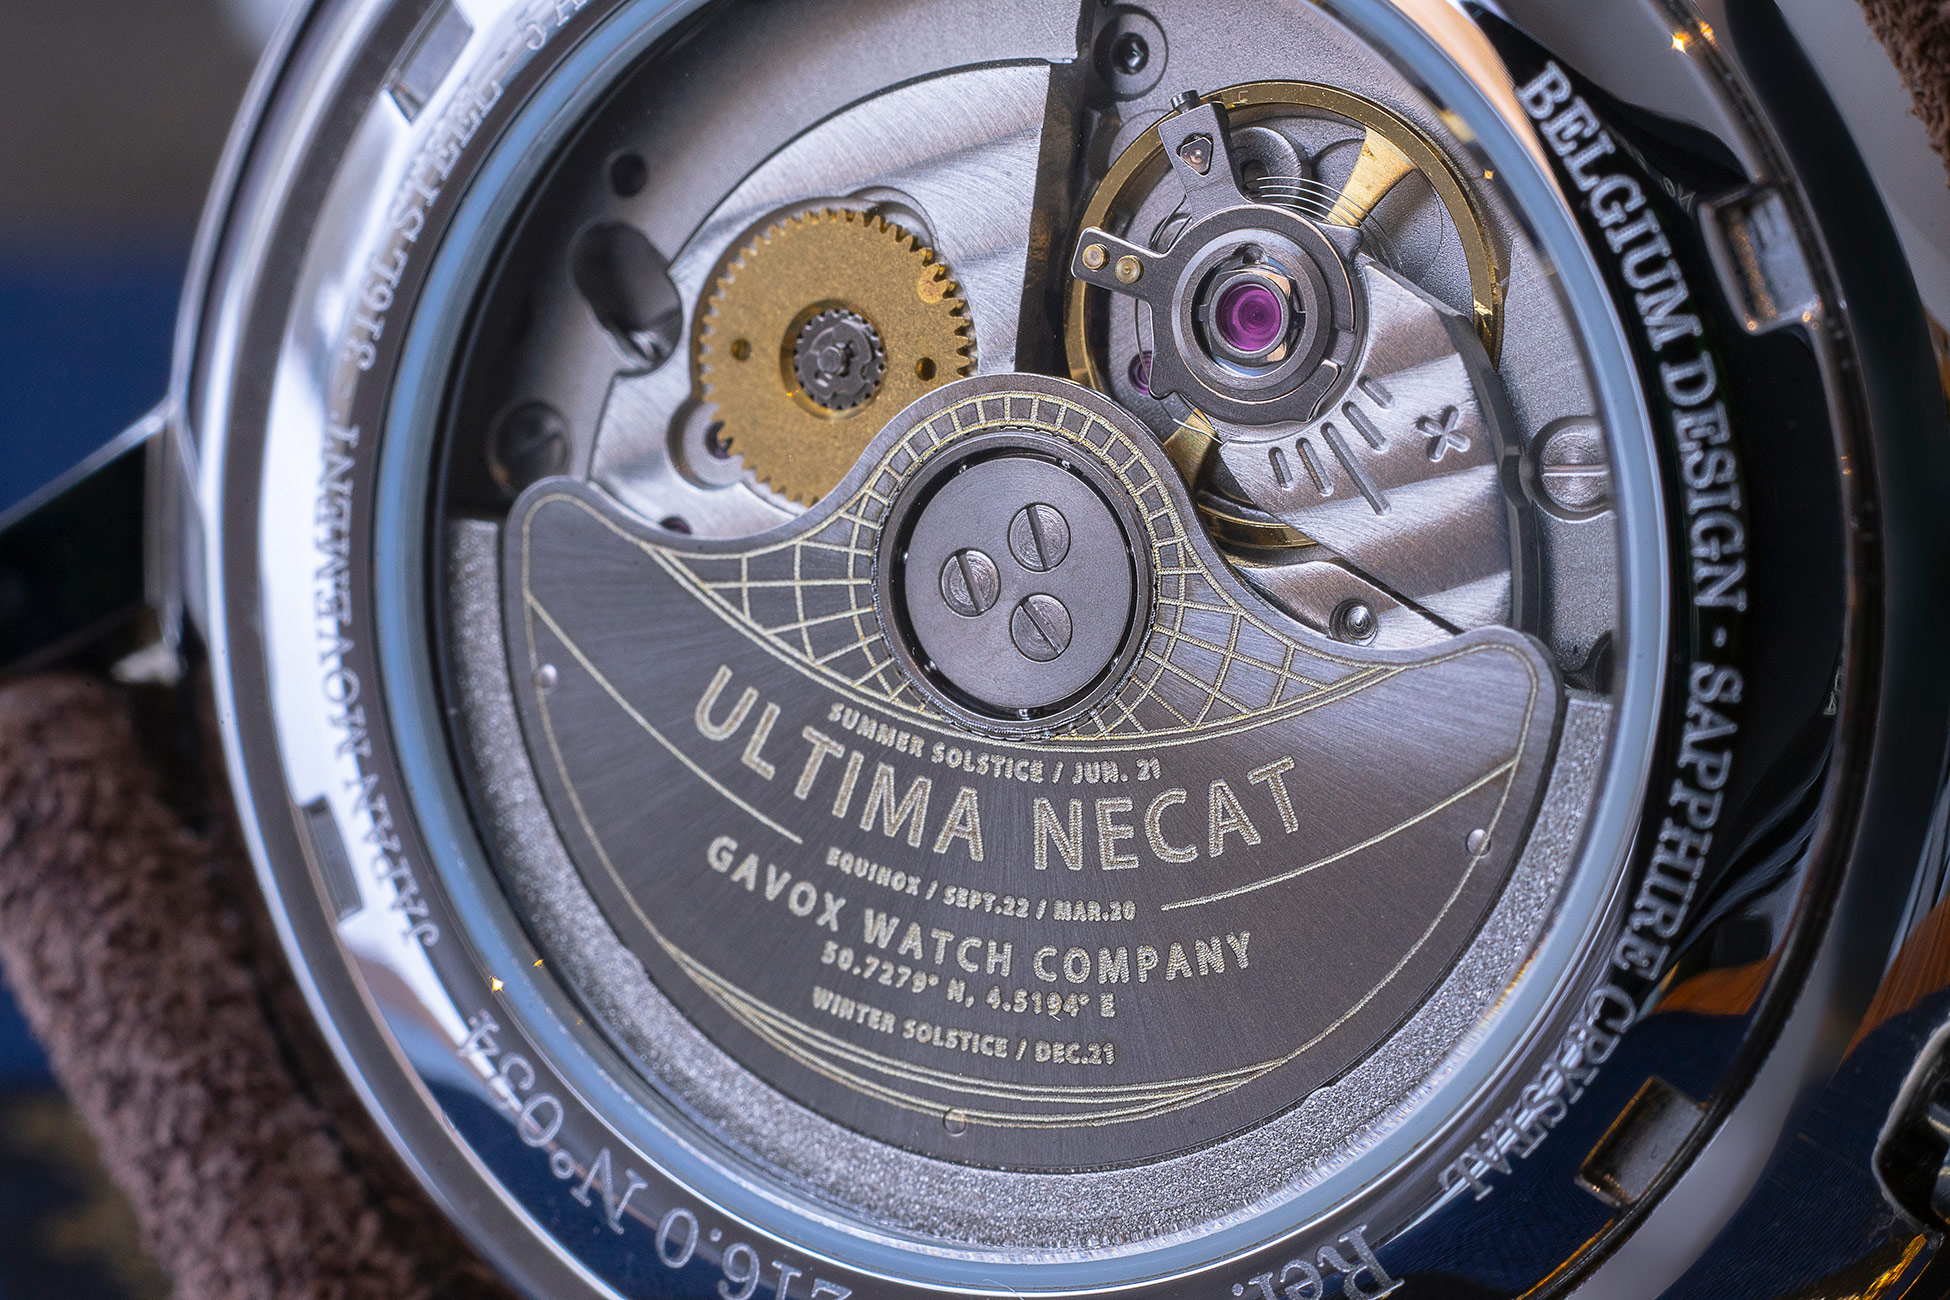 Gavox Ultima Necat And Carpe Diem Watches Review Wrist Time Reviews 